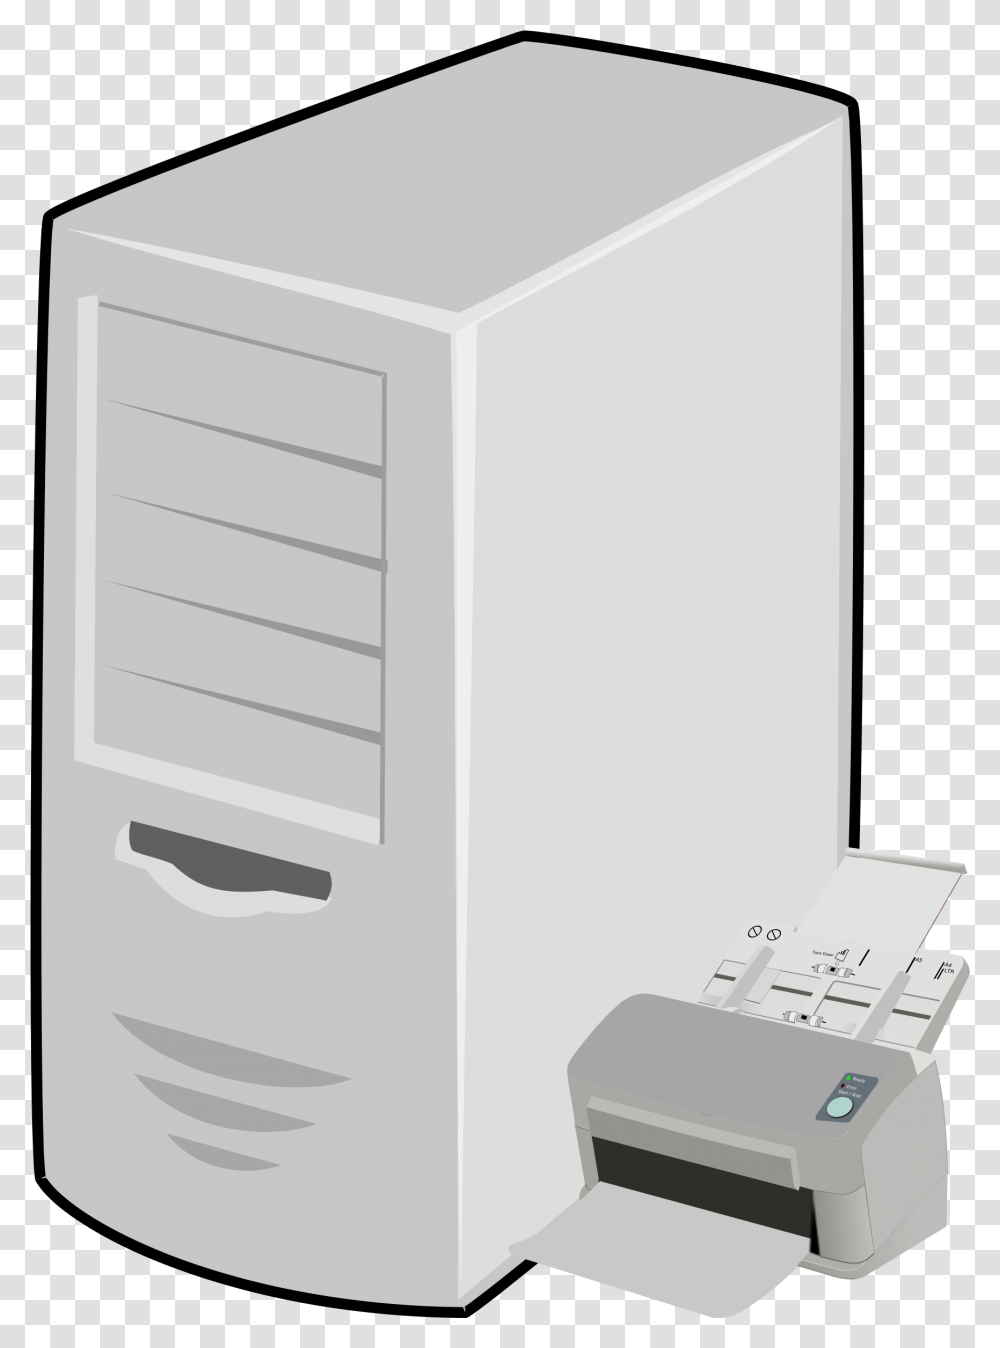 Fax Server Clip Arts Fax Server, Computer, Electronics, Mailbox, Letterbox Transparent Png